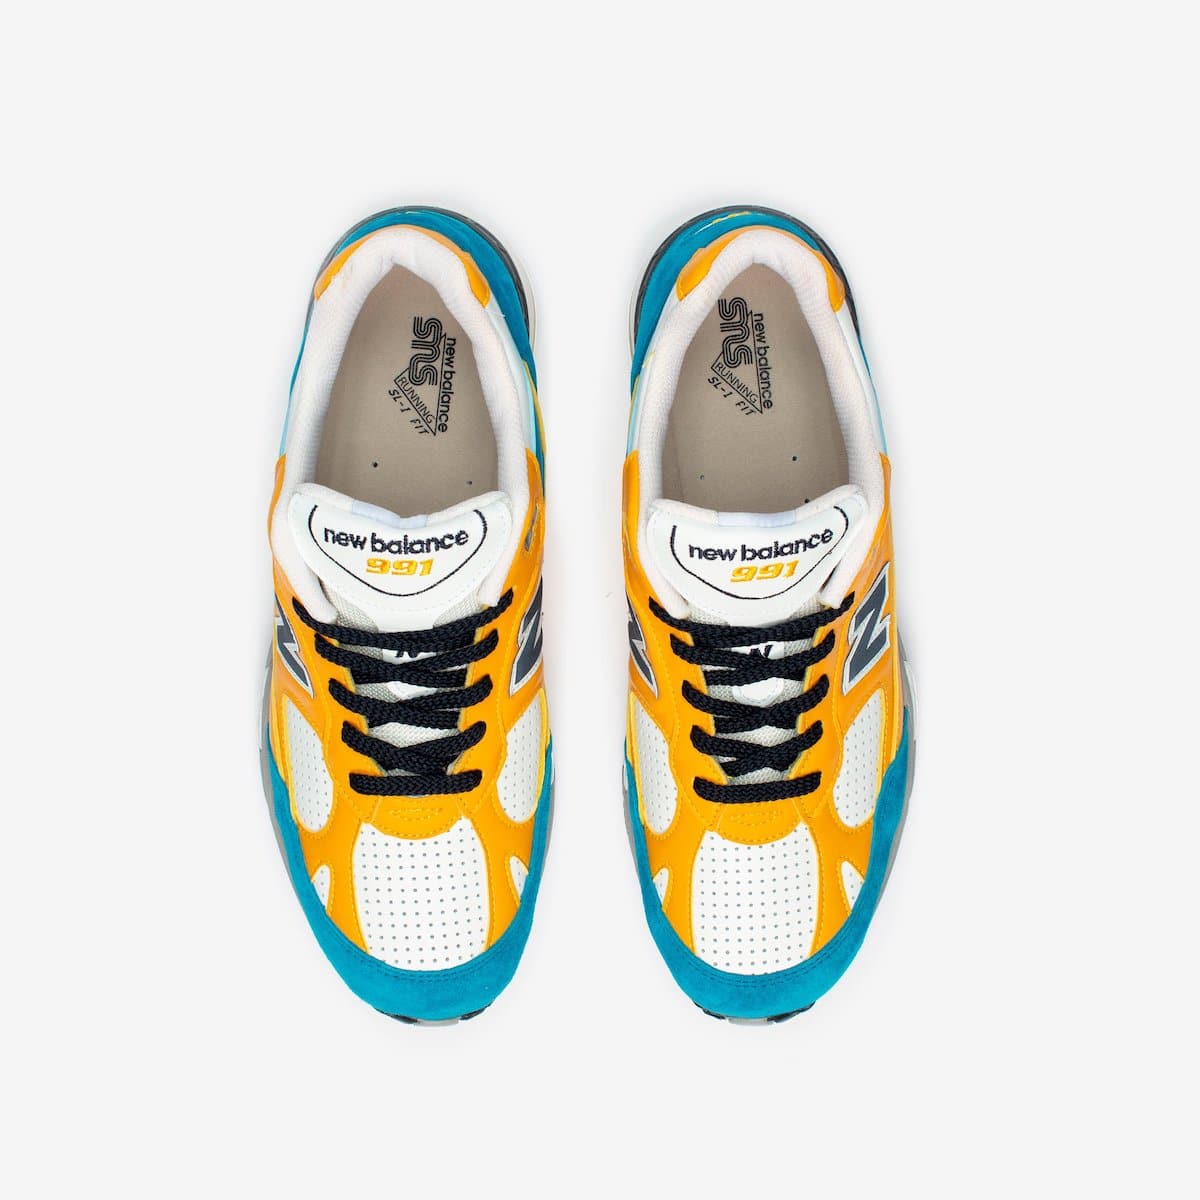 Sneakersnstuff x New Balance 991 Yellow Blue White Grey 6